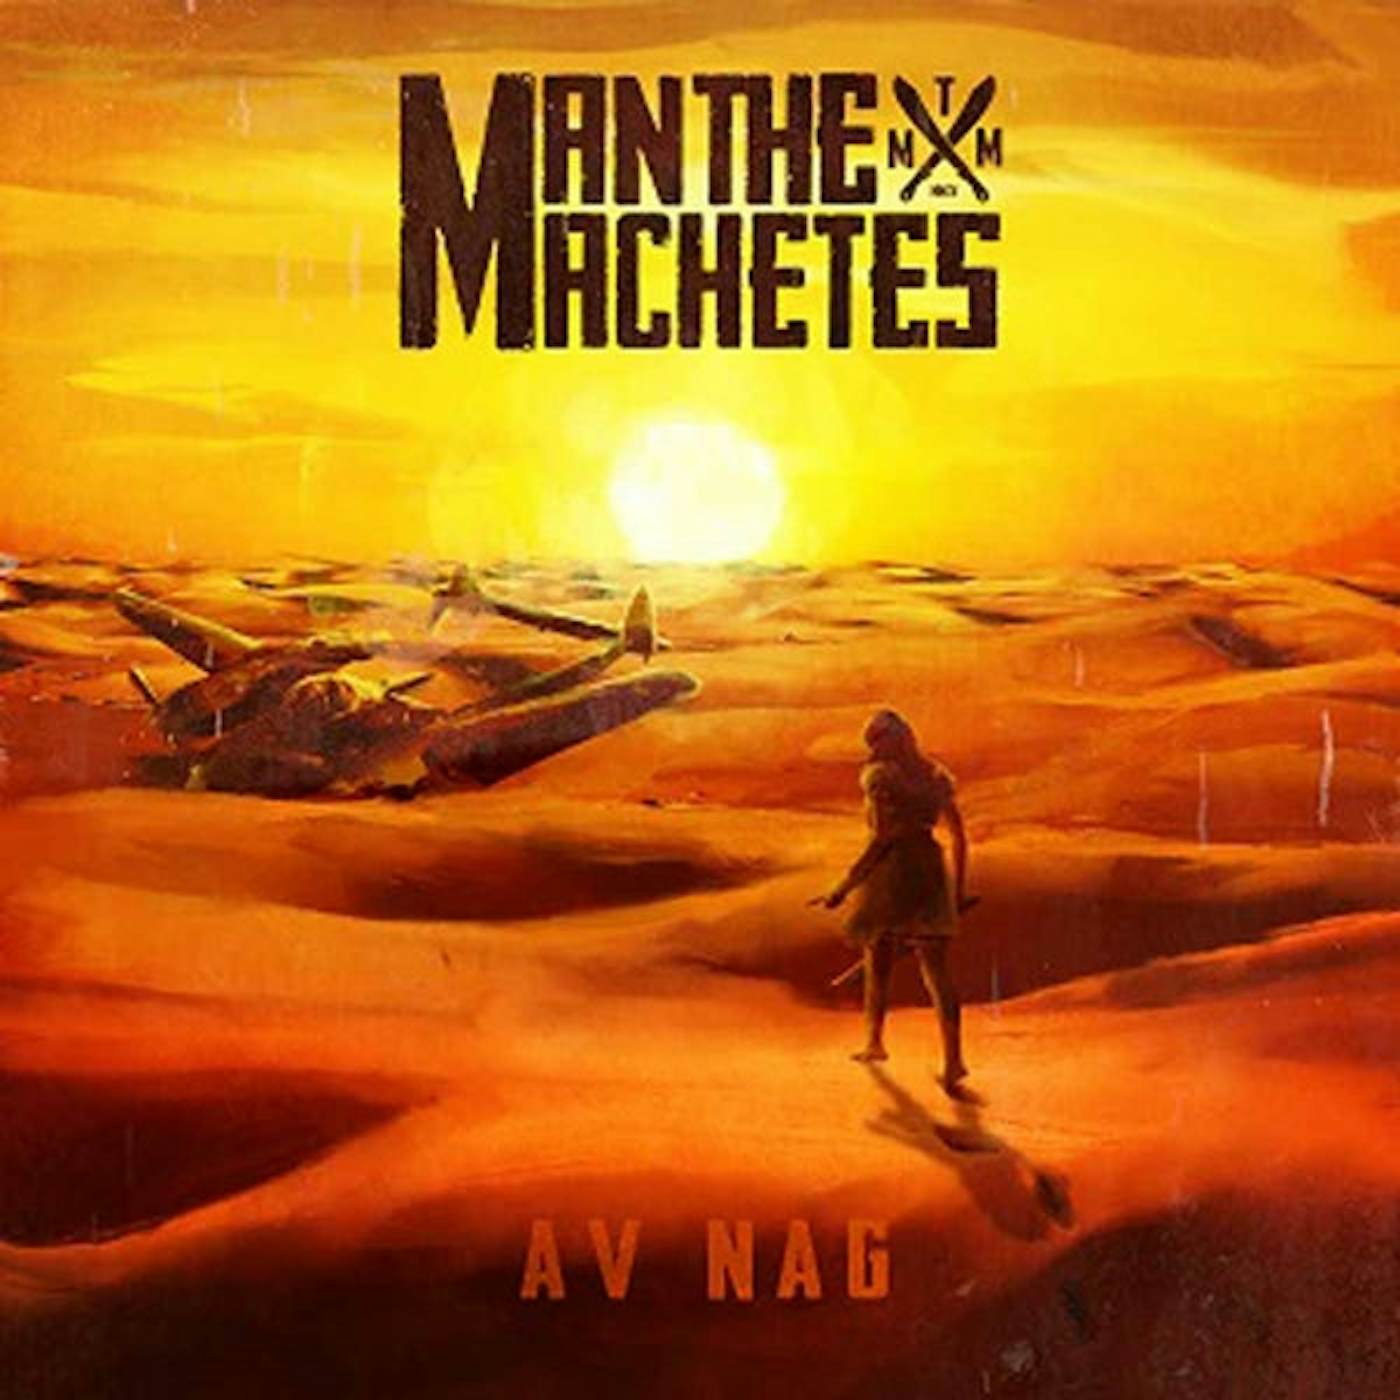 Man The Machetes LP - Av Nag (Vinyl)